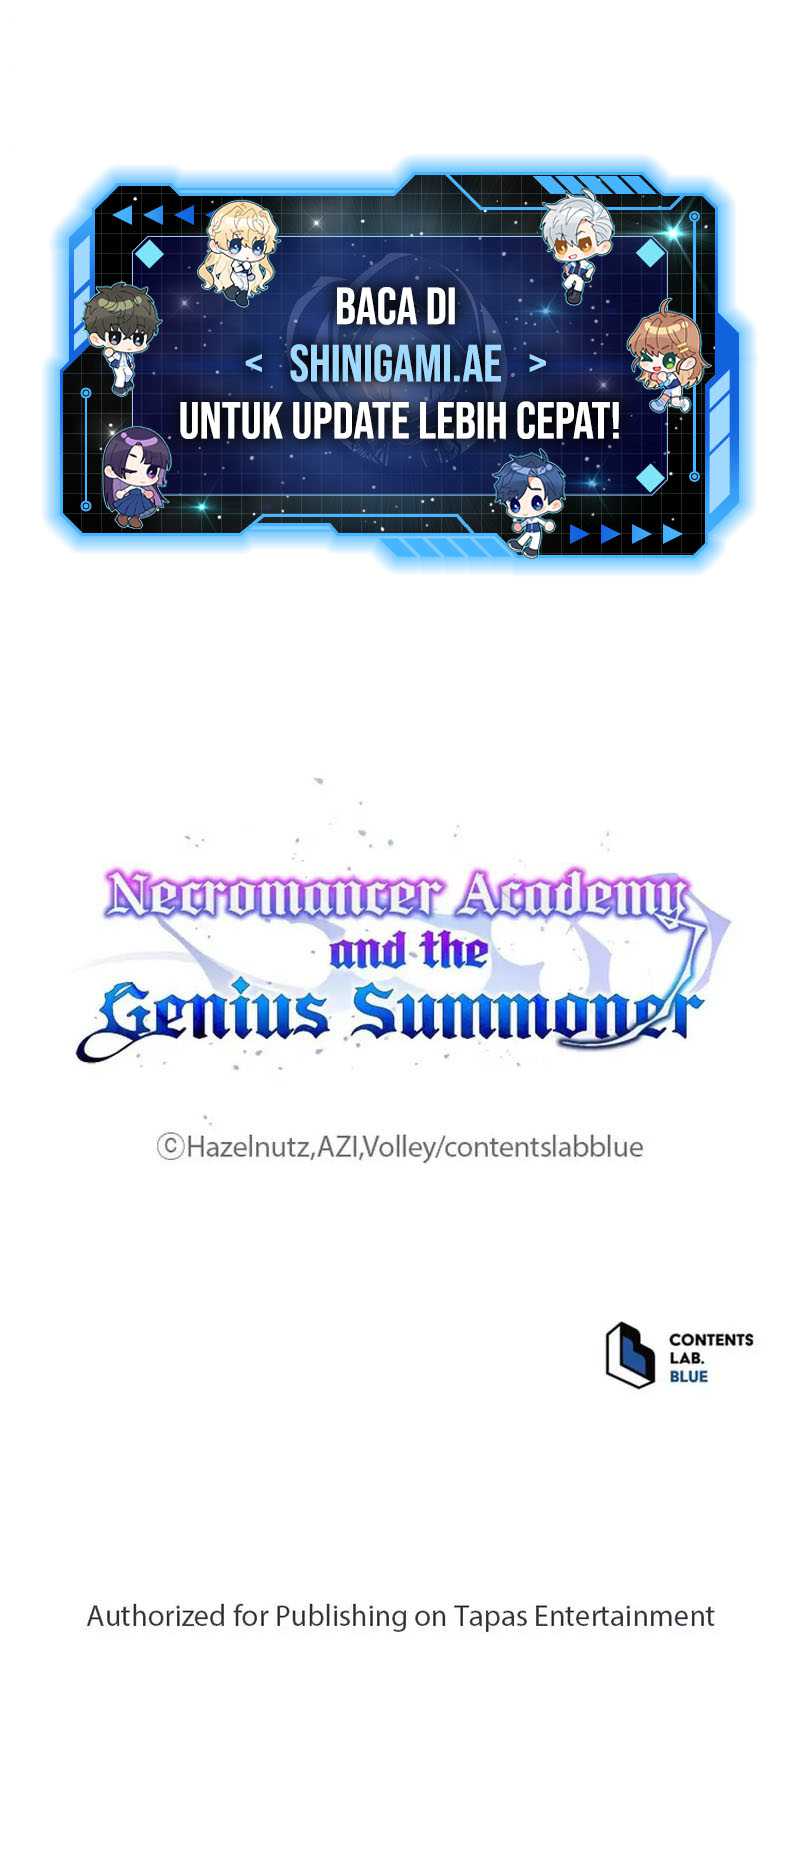 Necromancer Academy’s Genius Summoner Chapter 19